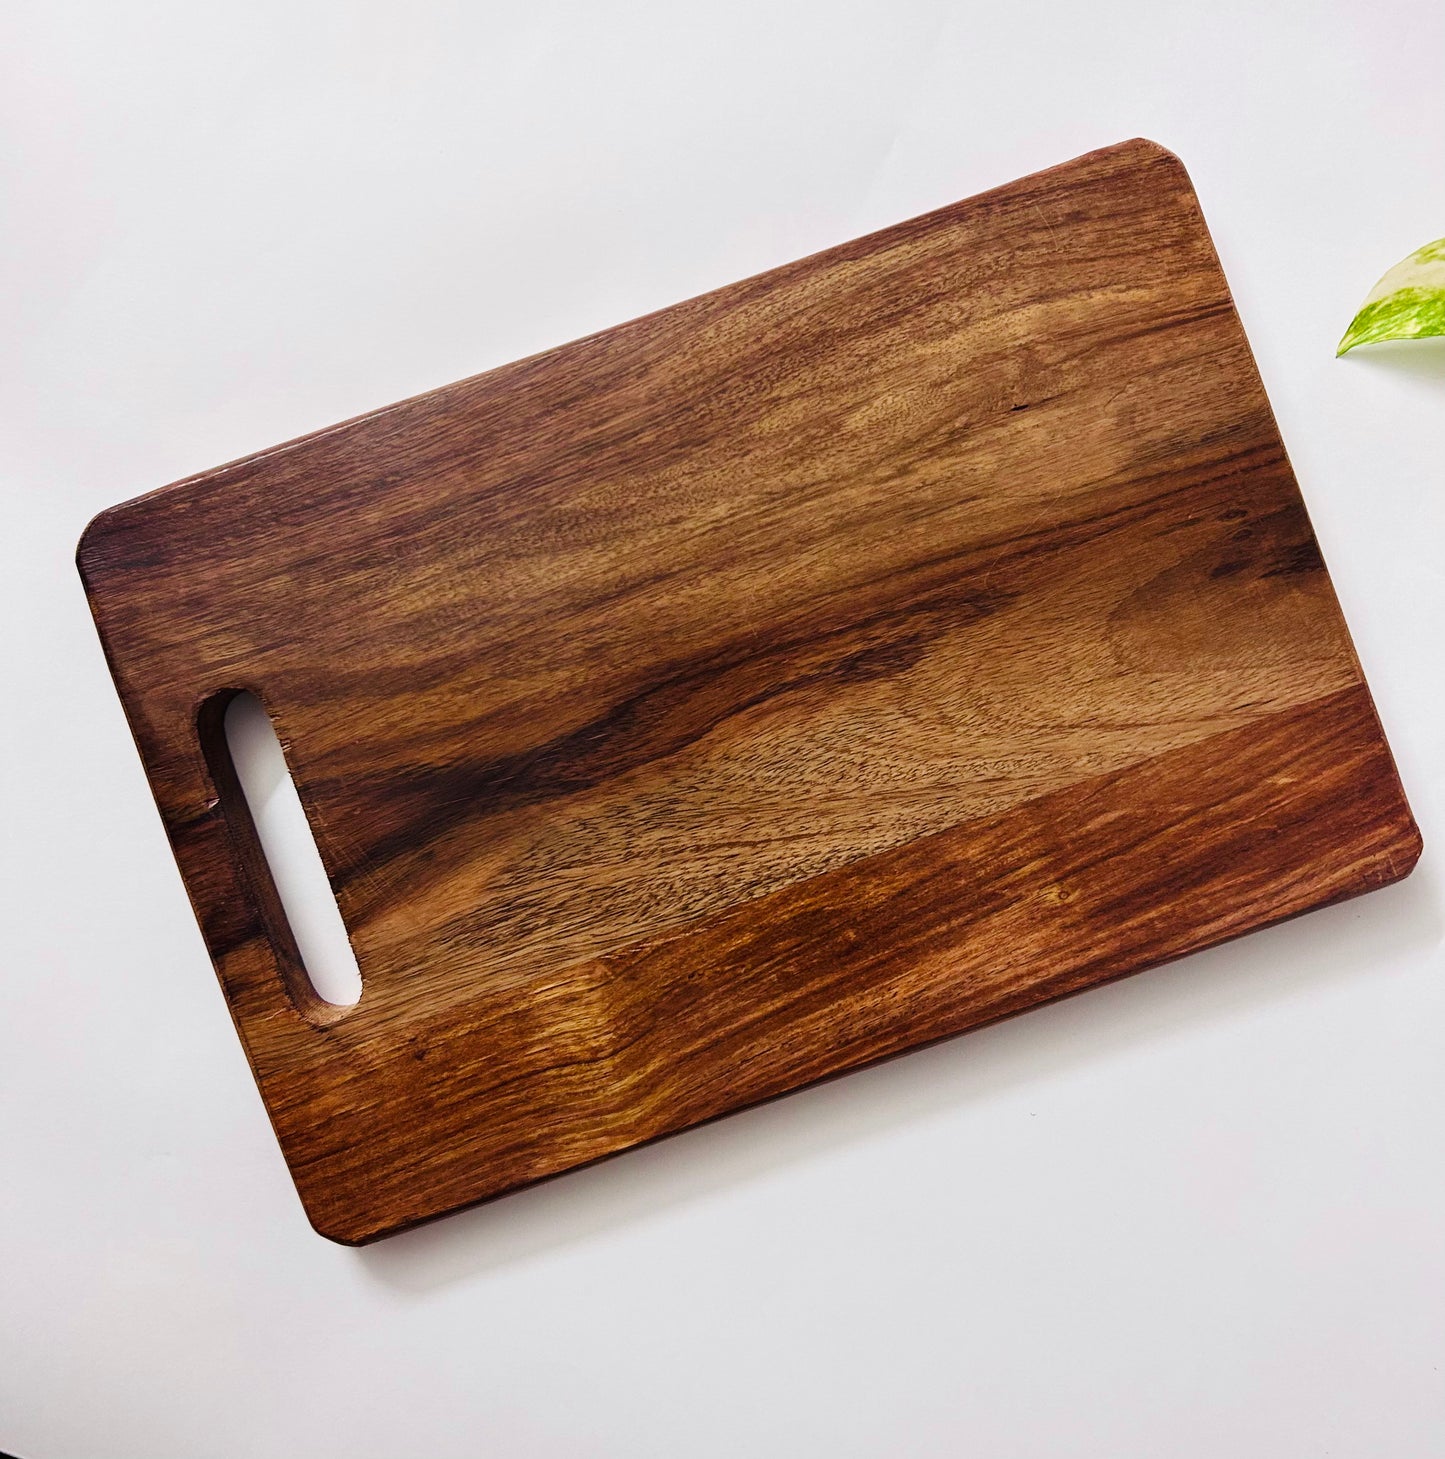 LEMONGINGER Wooden Chopping Board | Cutting Board | Serving Board